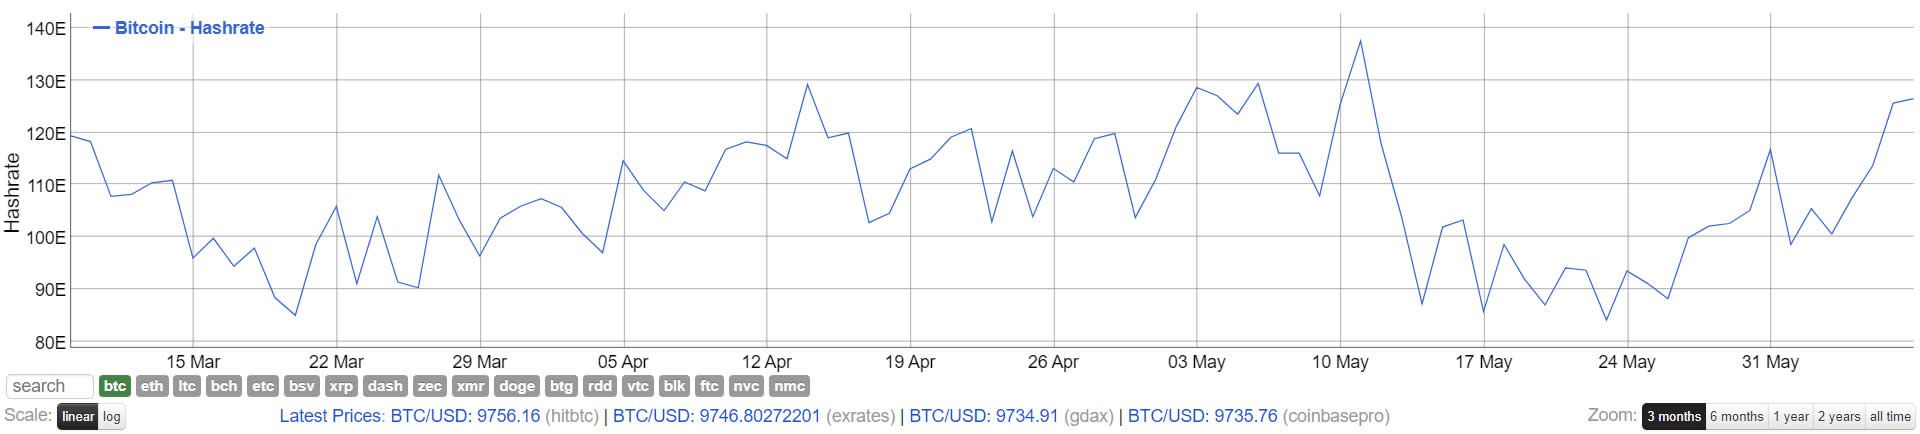 bitcoin hash rate